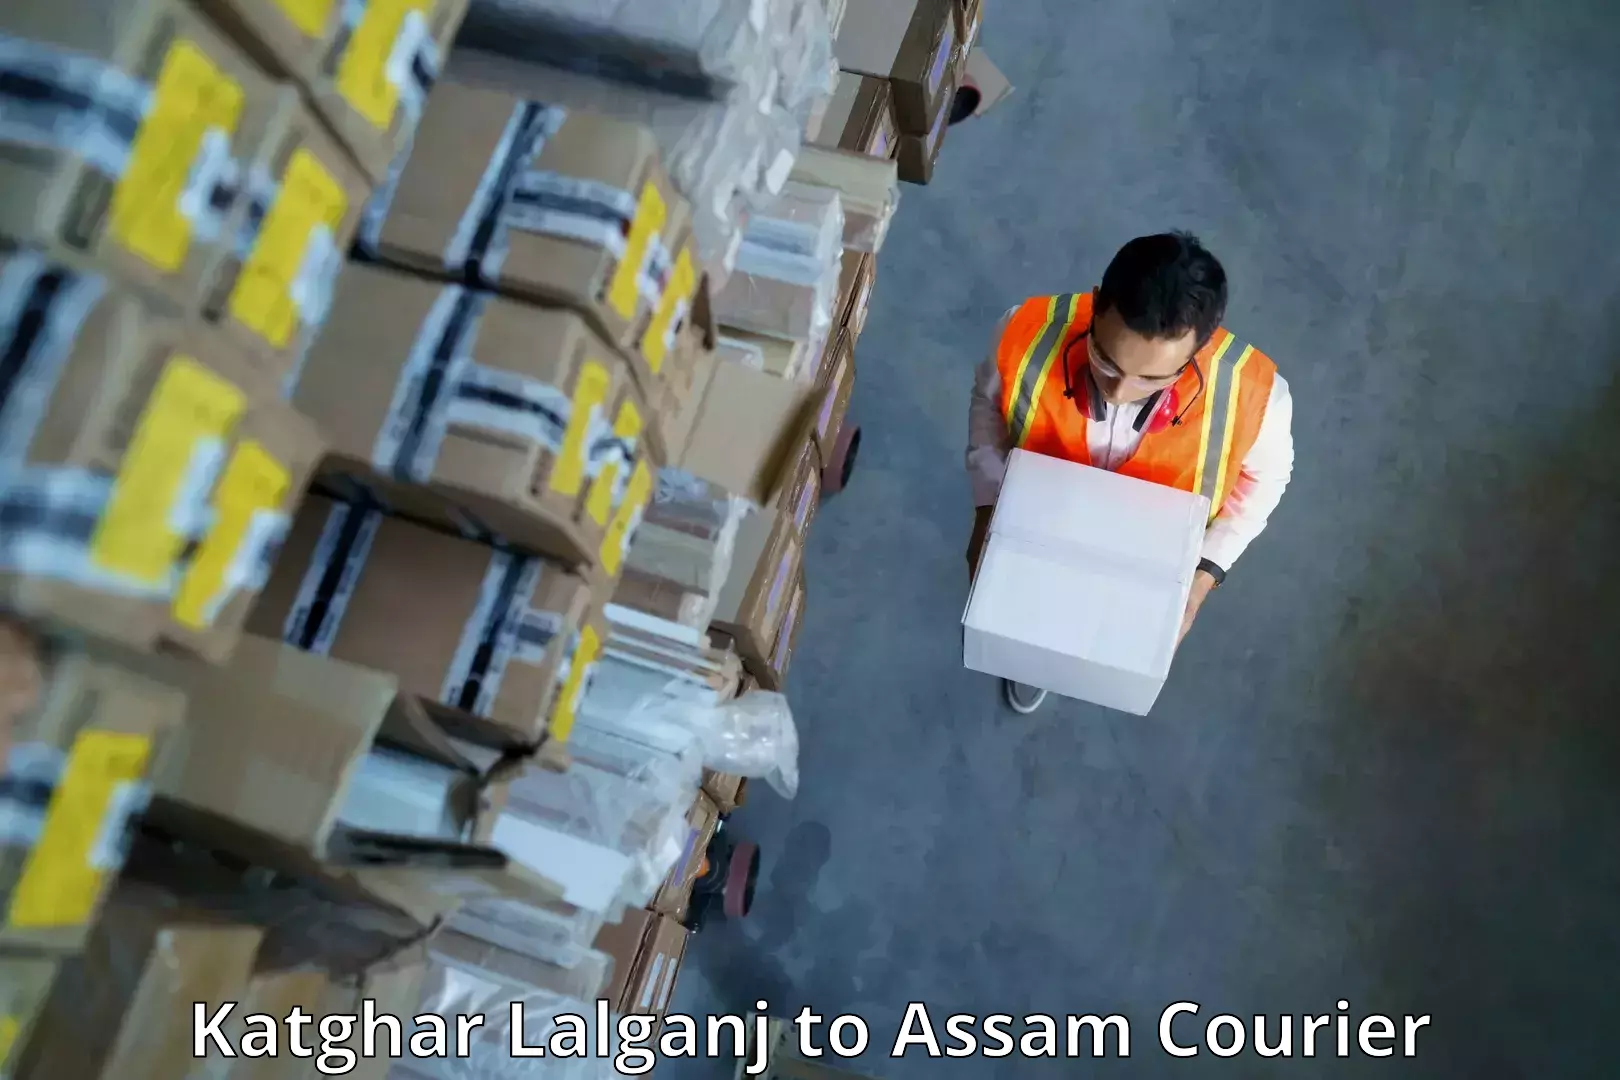 Express delivery solutions Katghar Lalganj to Assam